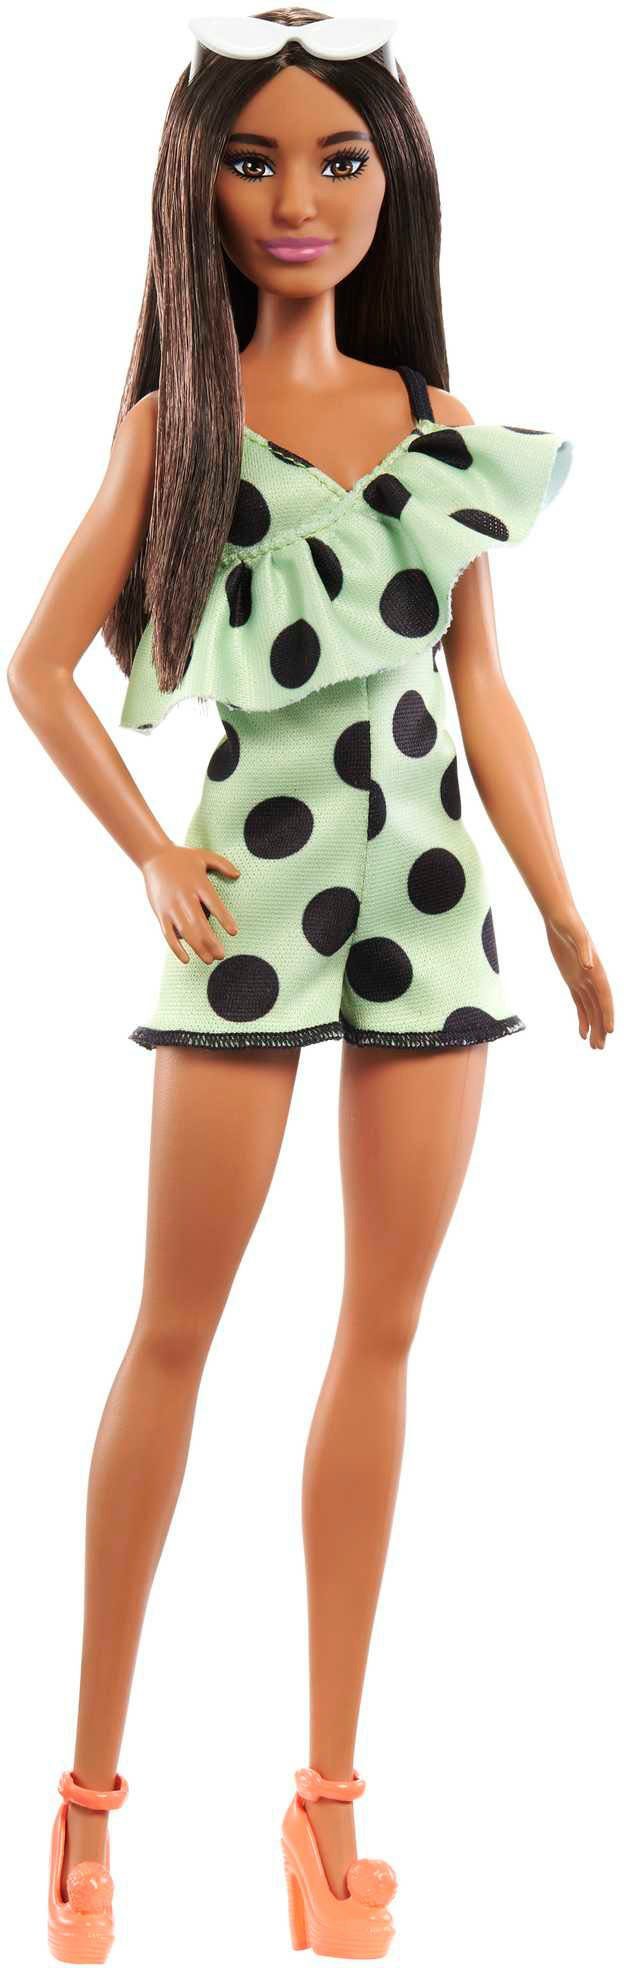 Mattel® Barbie Anziehpuppe Fashionistas, Lime Green Polka Dots